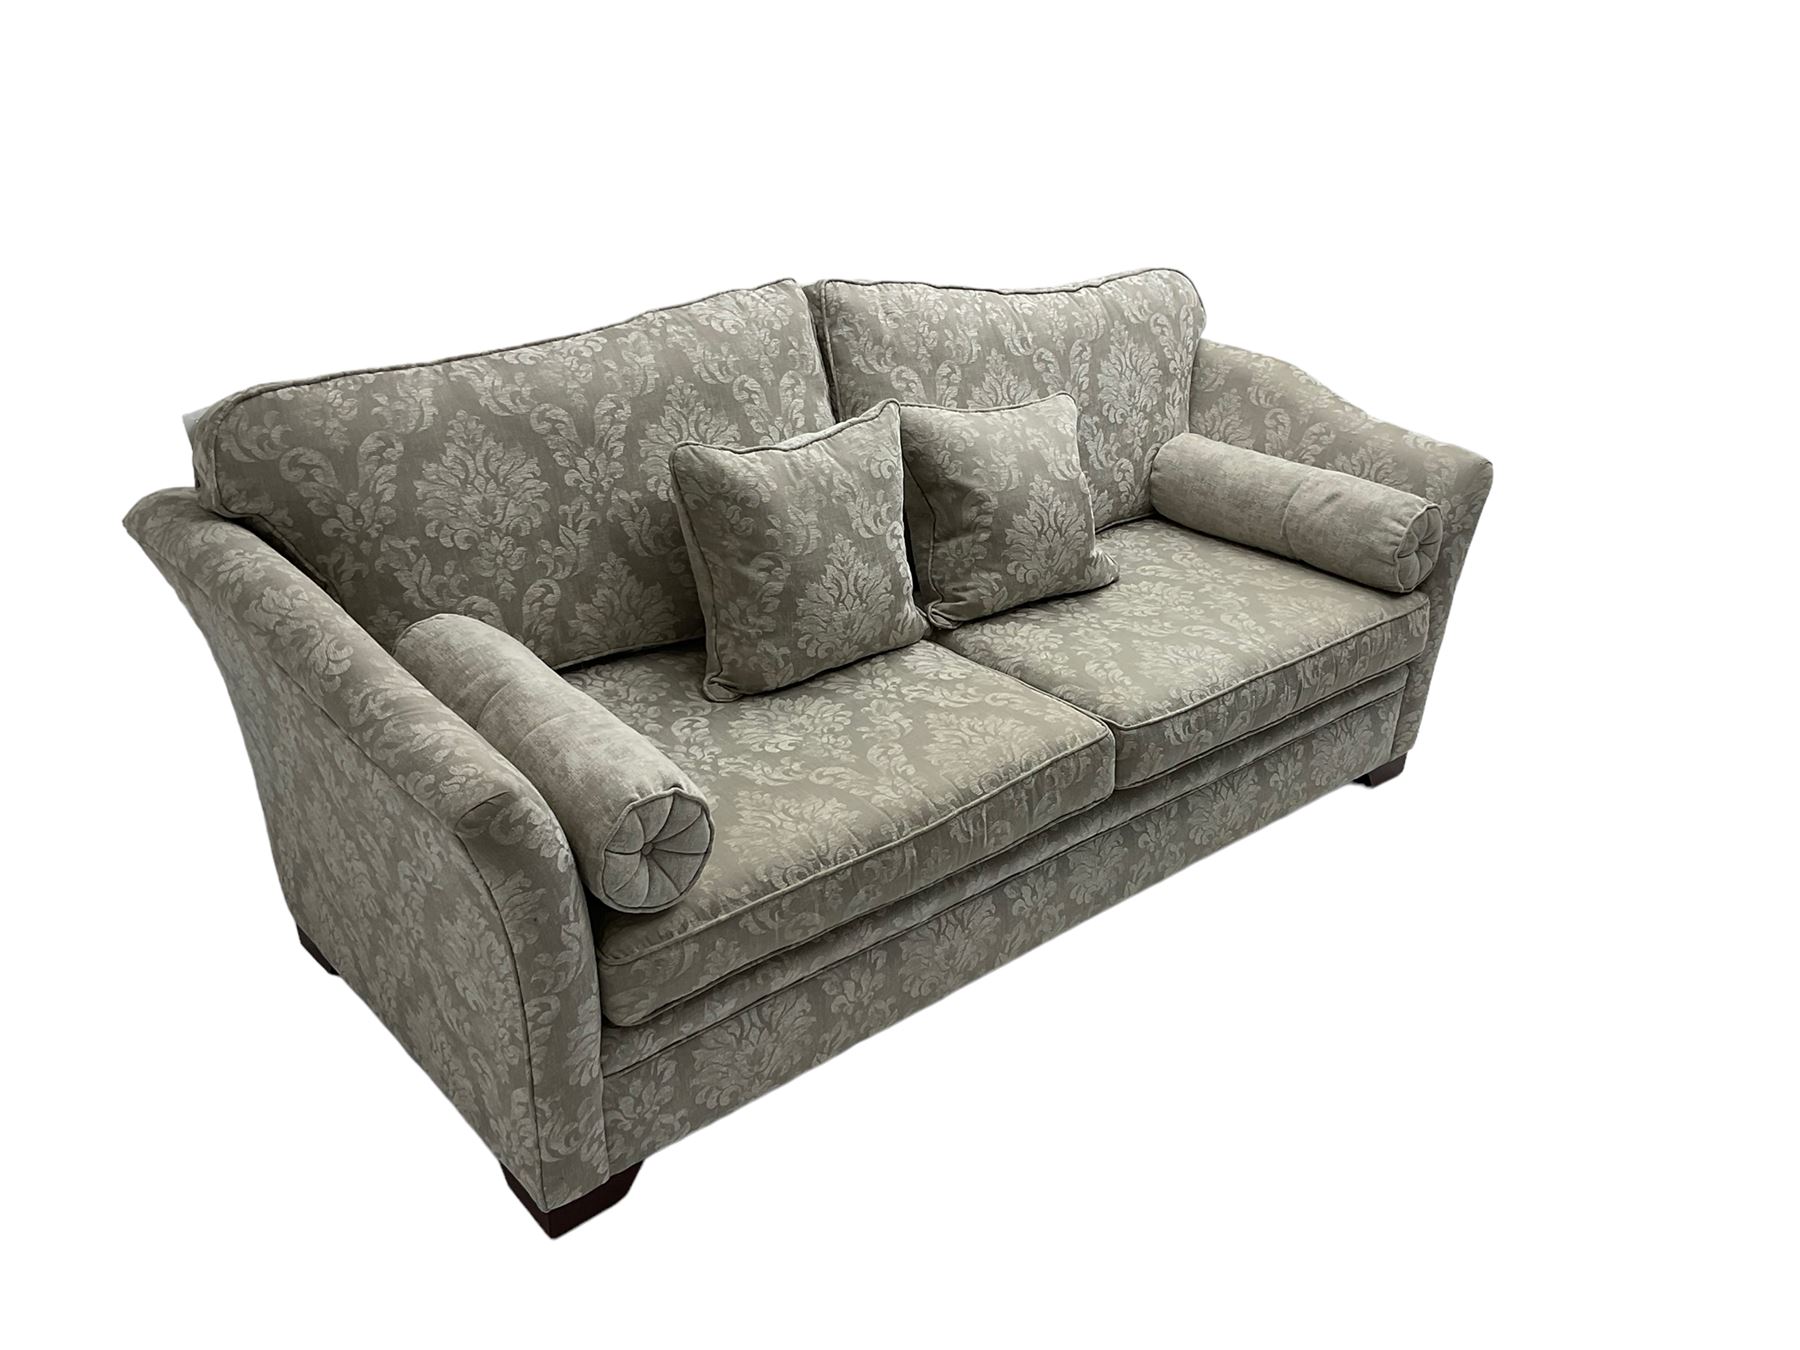 Finline - 'Othello' large three seat sofa - Image 6 of 6